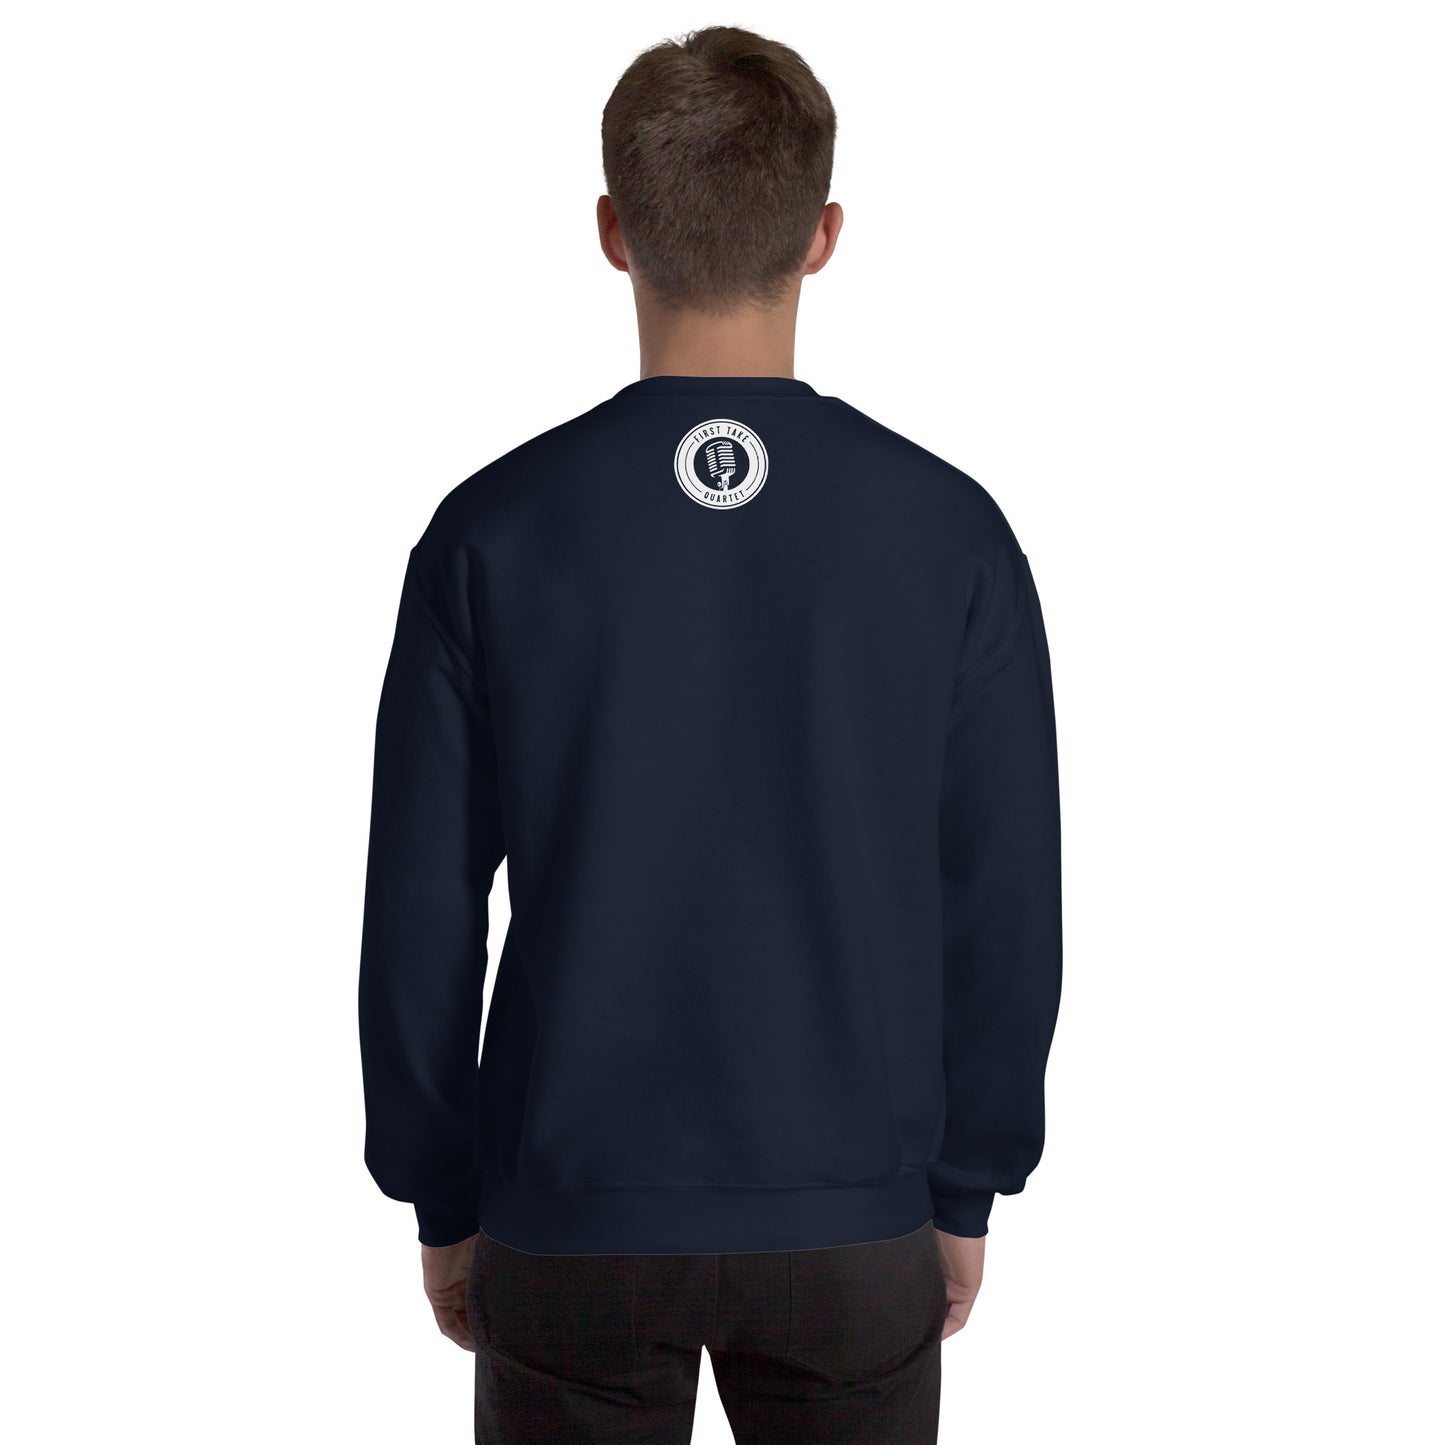 First Take - Printed Gildan Unisex Sweatshirt